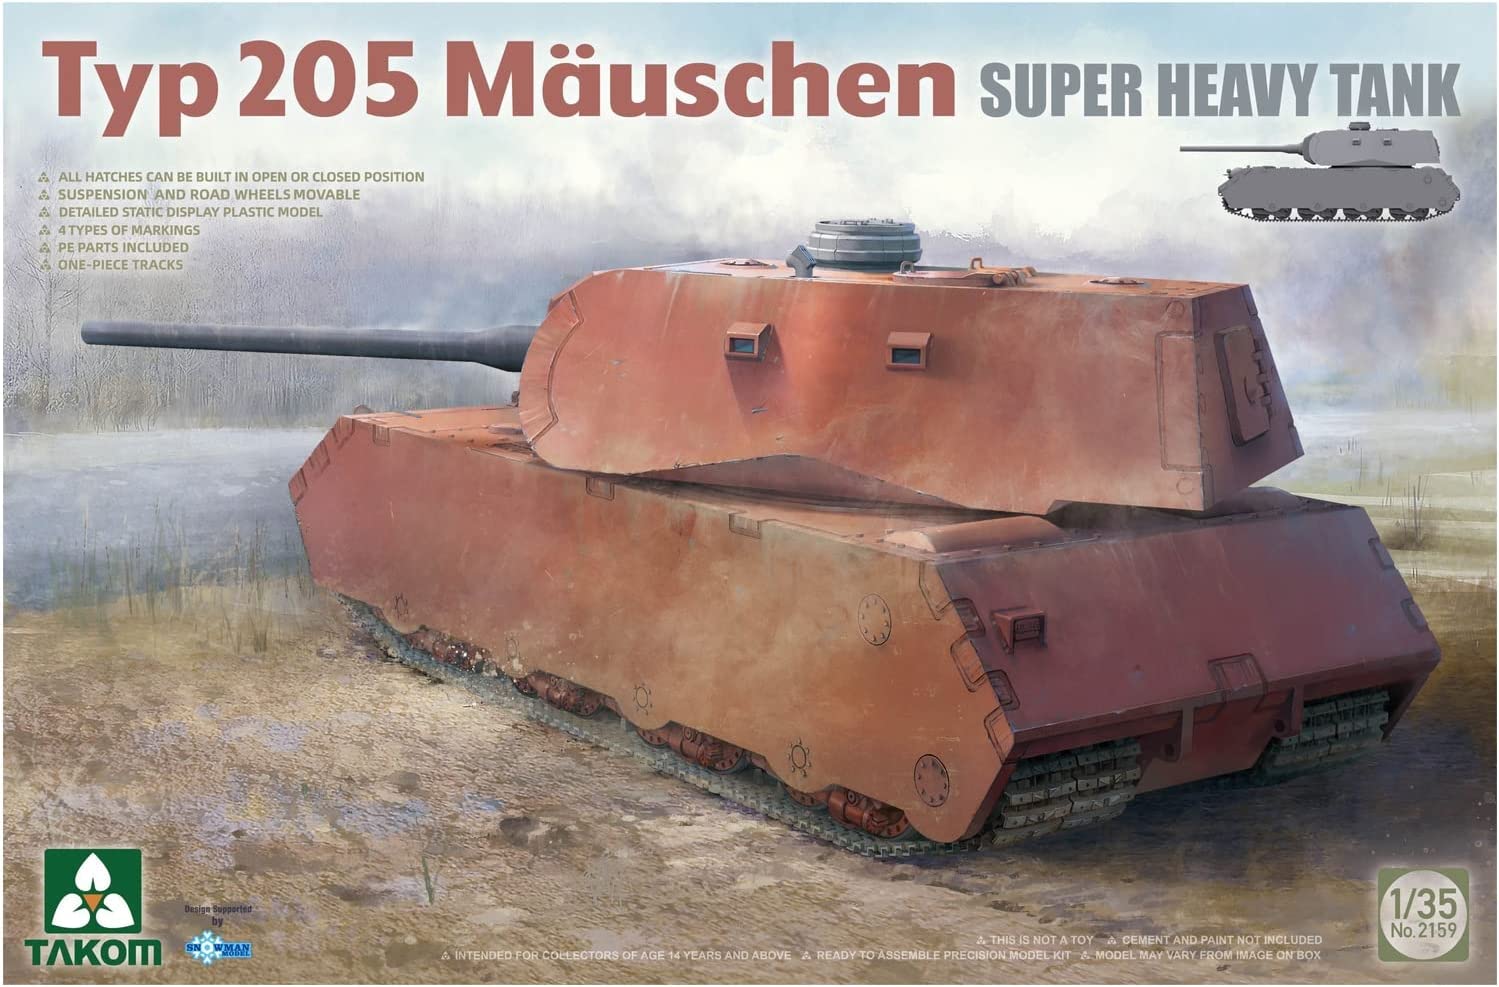 2159  техника и вооружение  Typ 205 Mauschen Super Heavy Tank  (1:35)